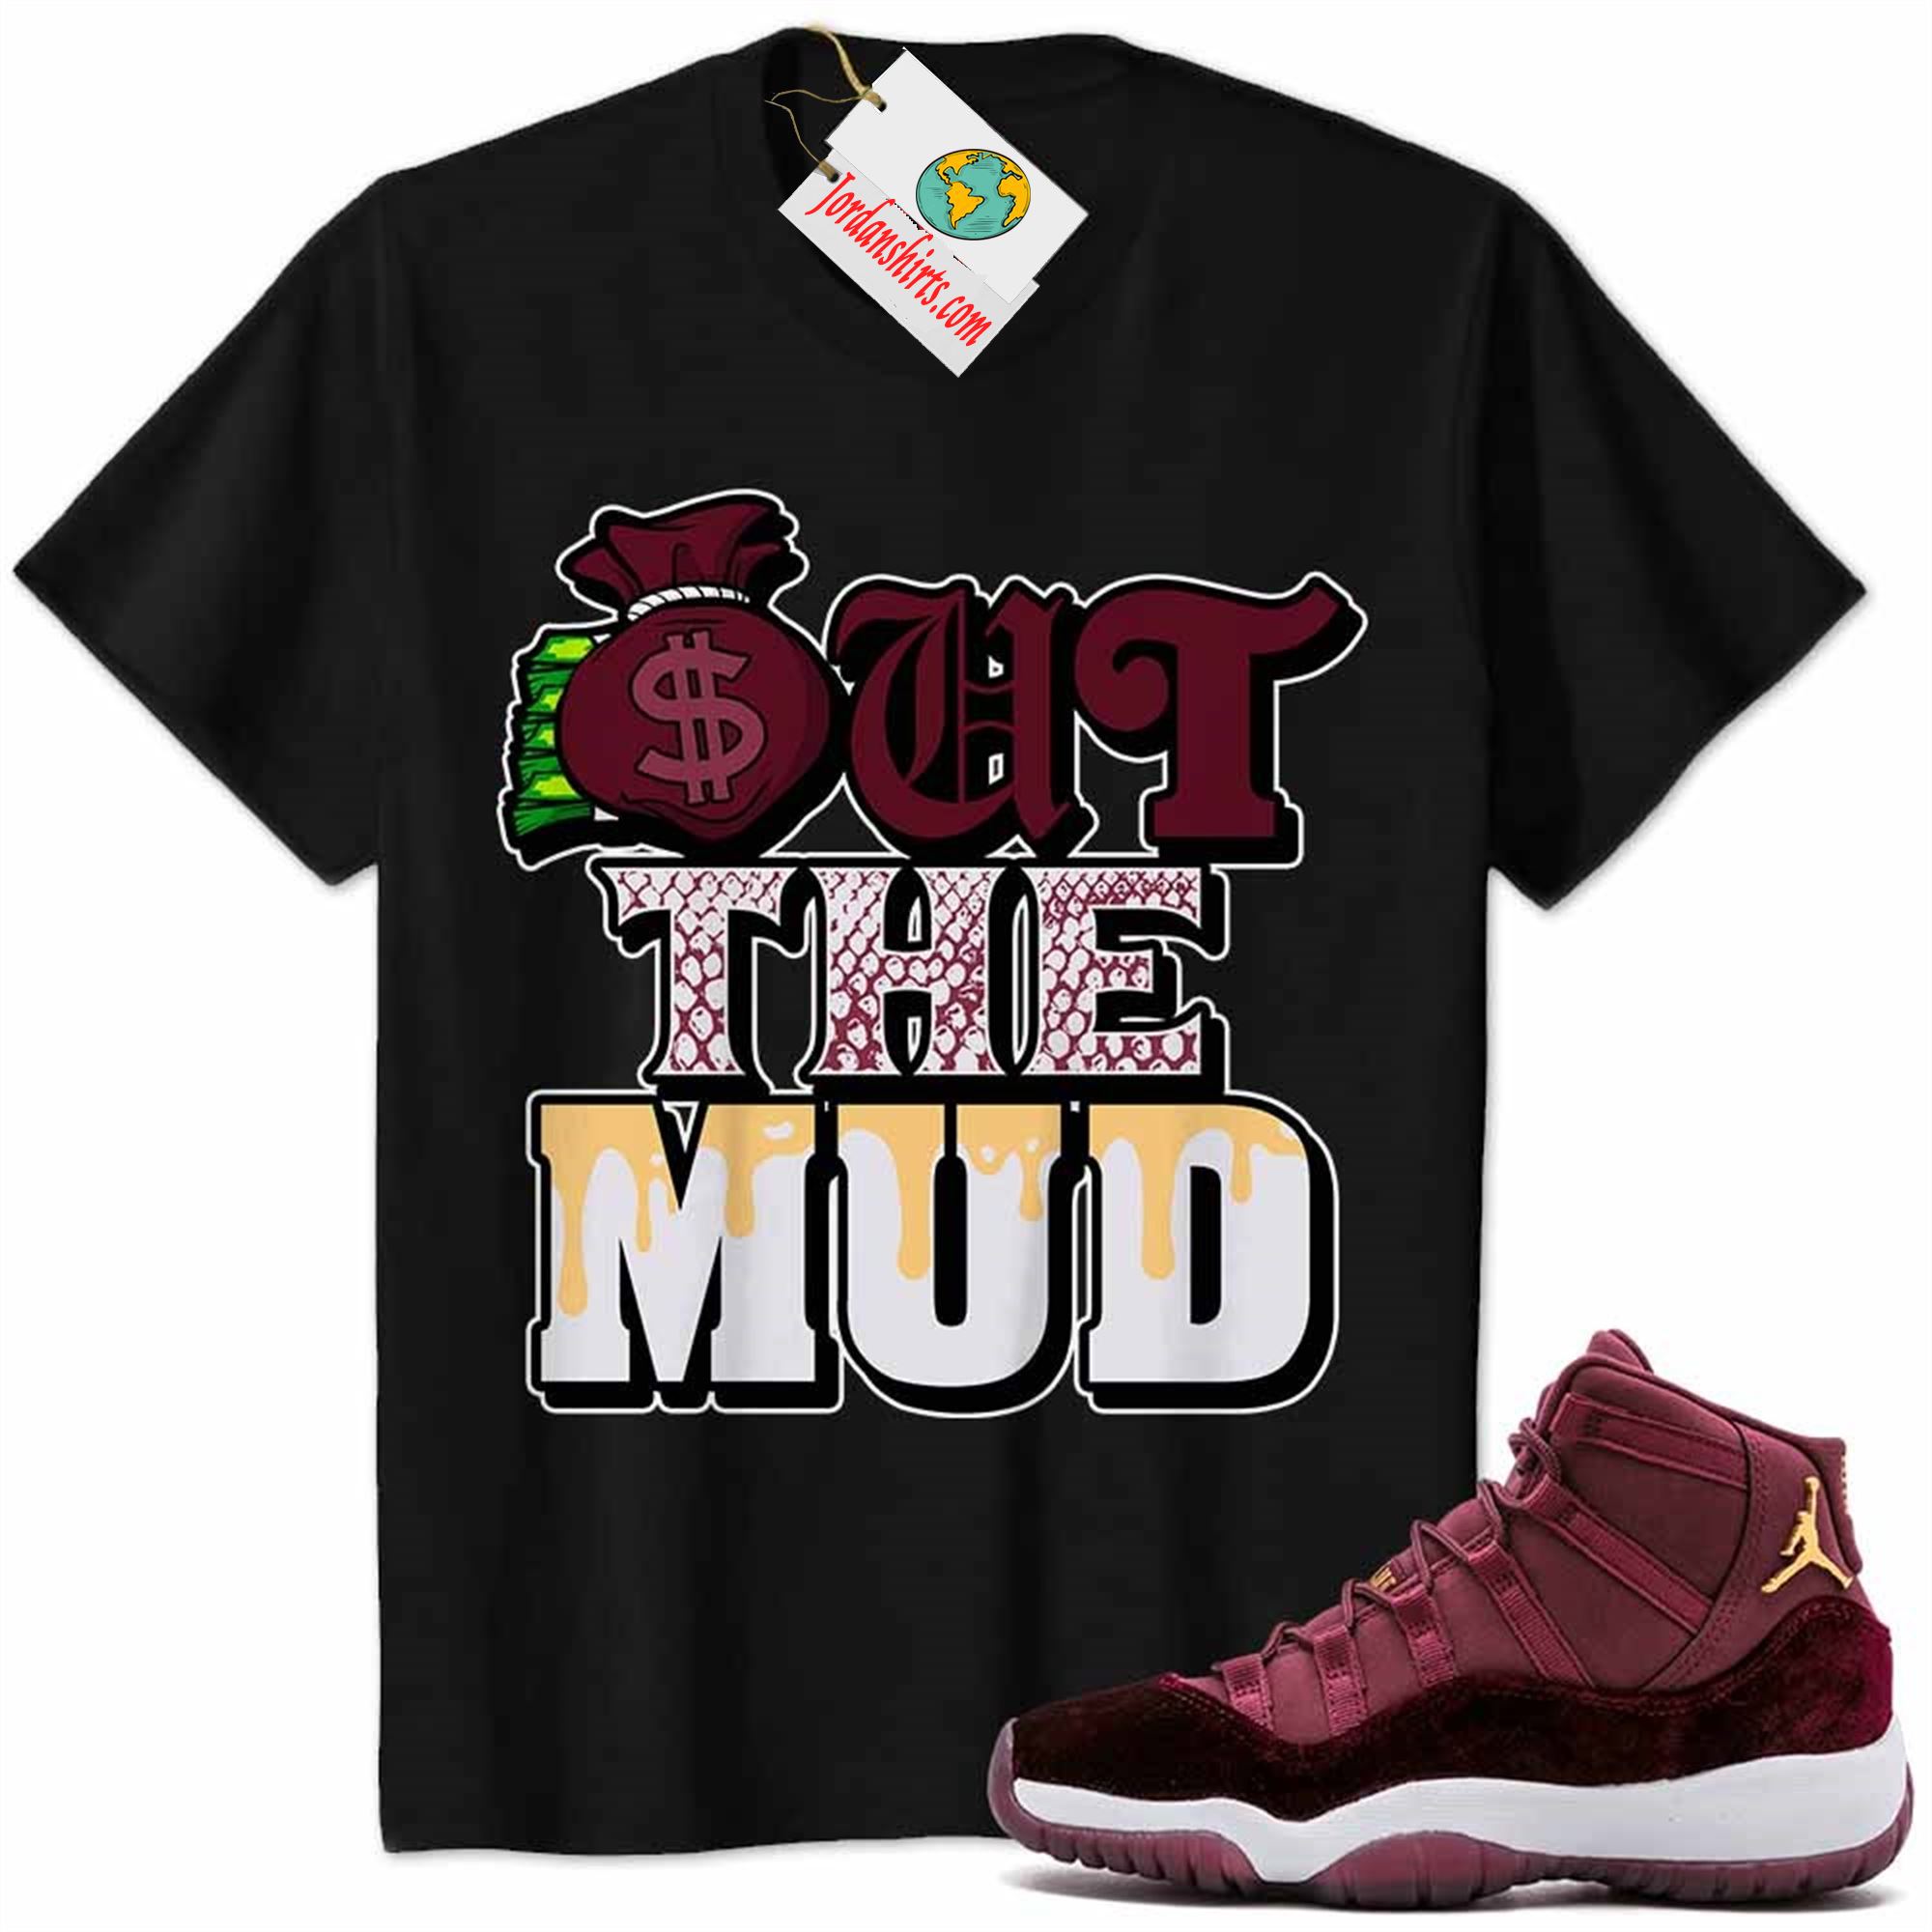 Jordan 11 Shirt, Jordan 11 Velvet Shirt Out The Mud Money Bag Black Size Up To 5xl